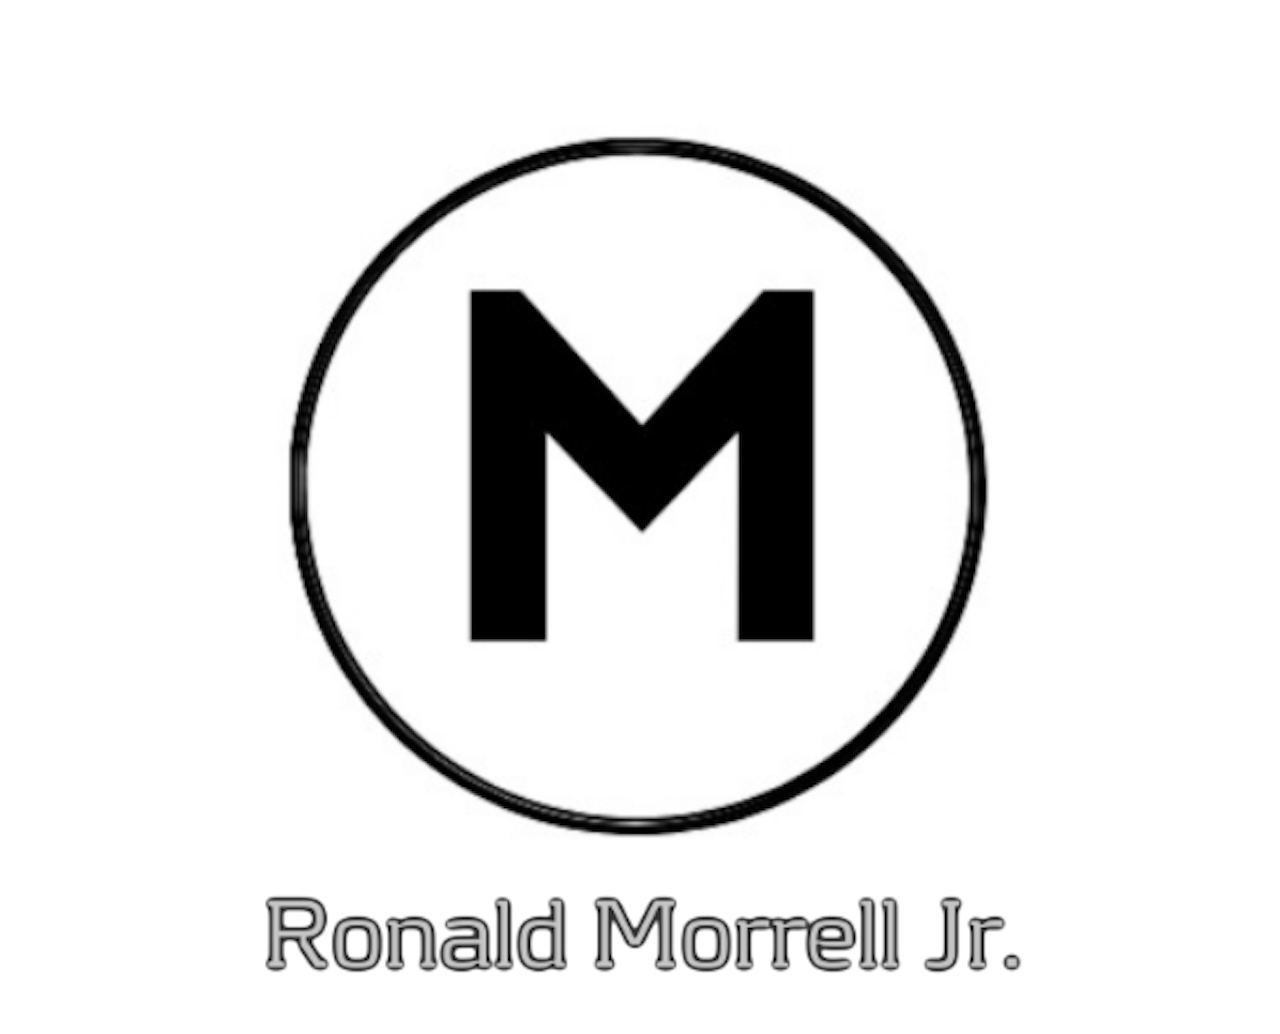 Ronald Morrell Jr.